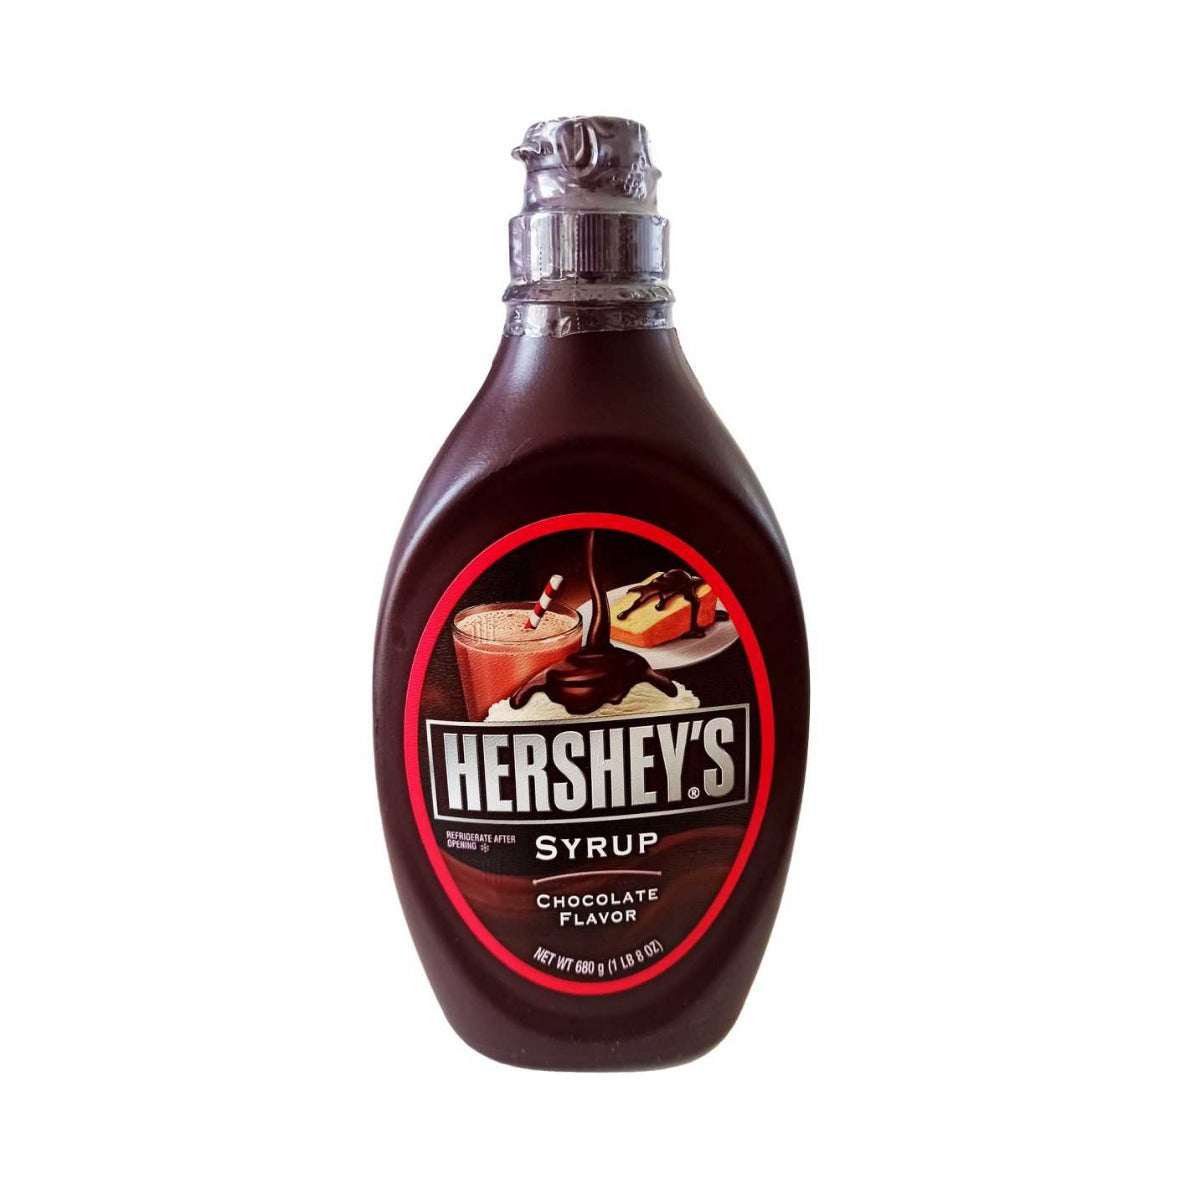 Hershey's Chocolate Syrup - סירופ הרשי שוקולד - טעימים